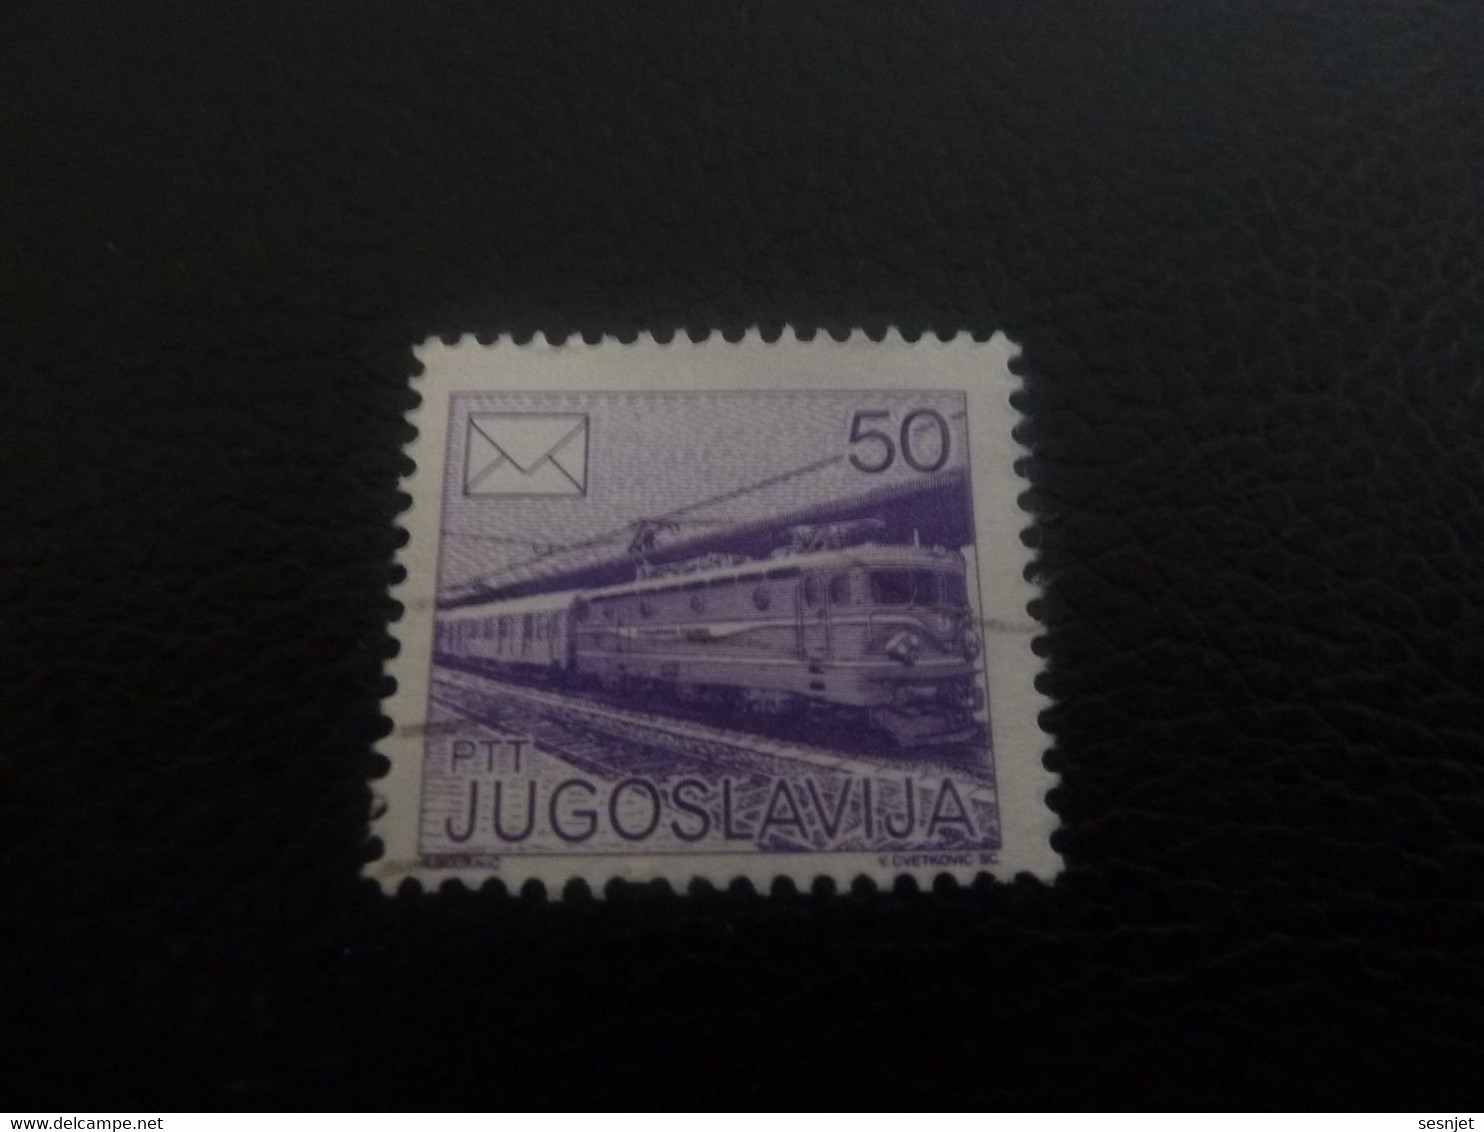 Ptt - Jugoslavija - V. Cvetrovic - Val 50 - Violet - Oblitéré - - Used Stamps